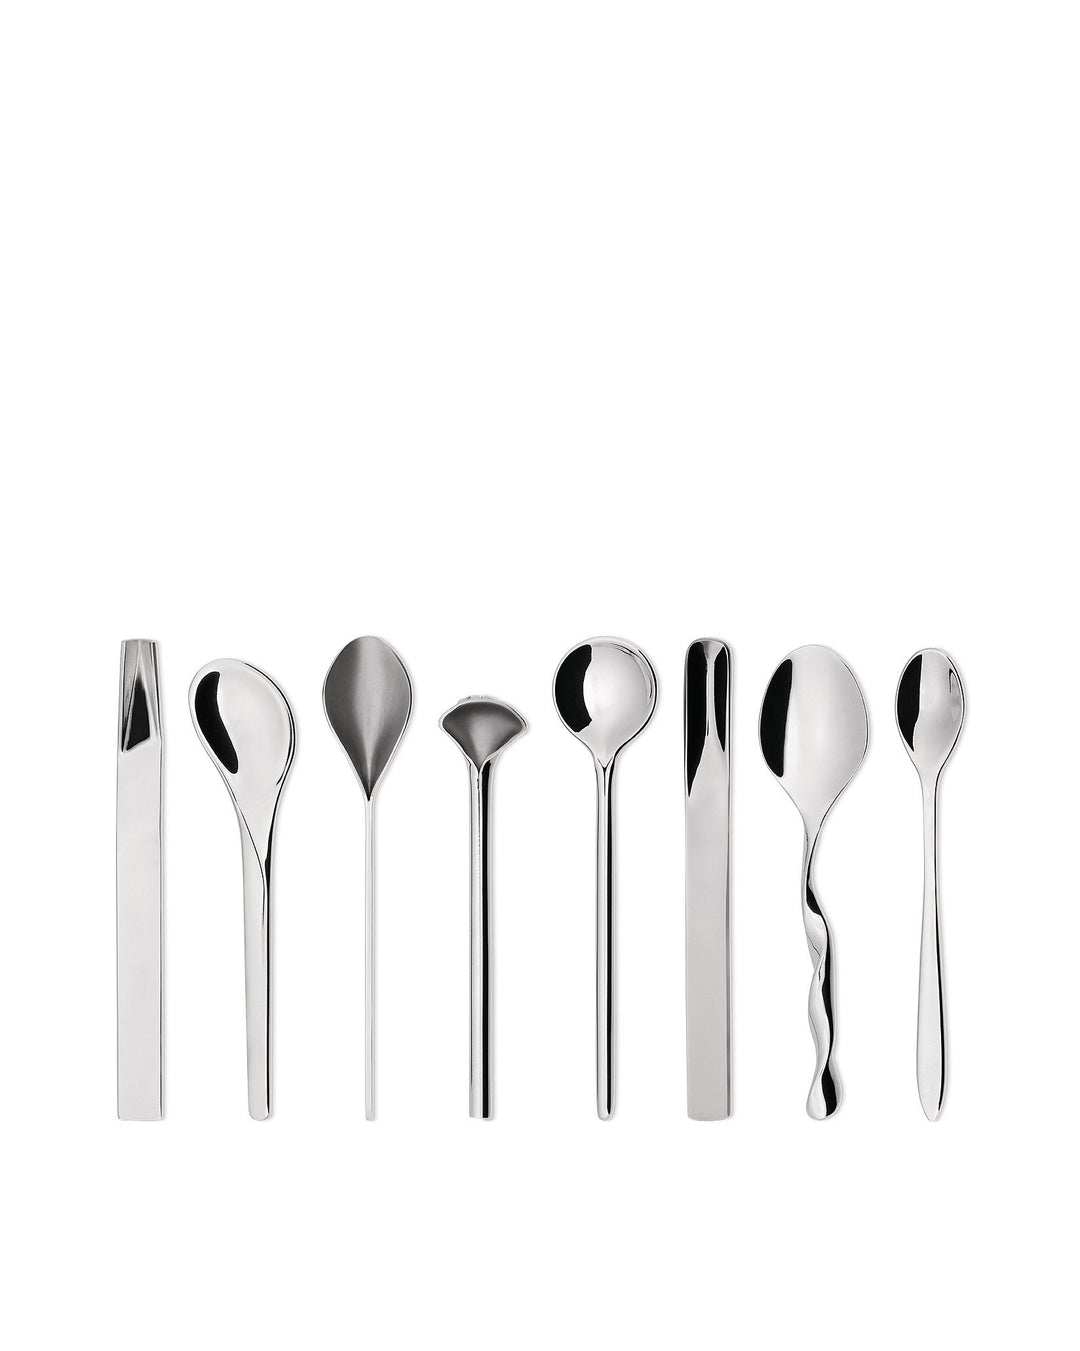 Alessi 8 pieces Spoons Set Main01